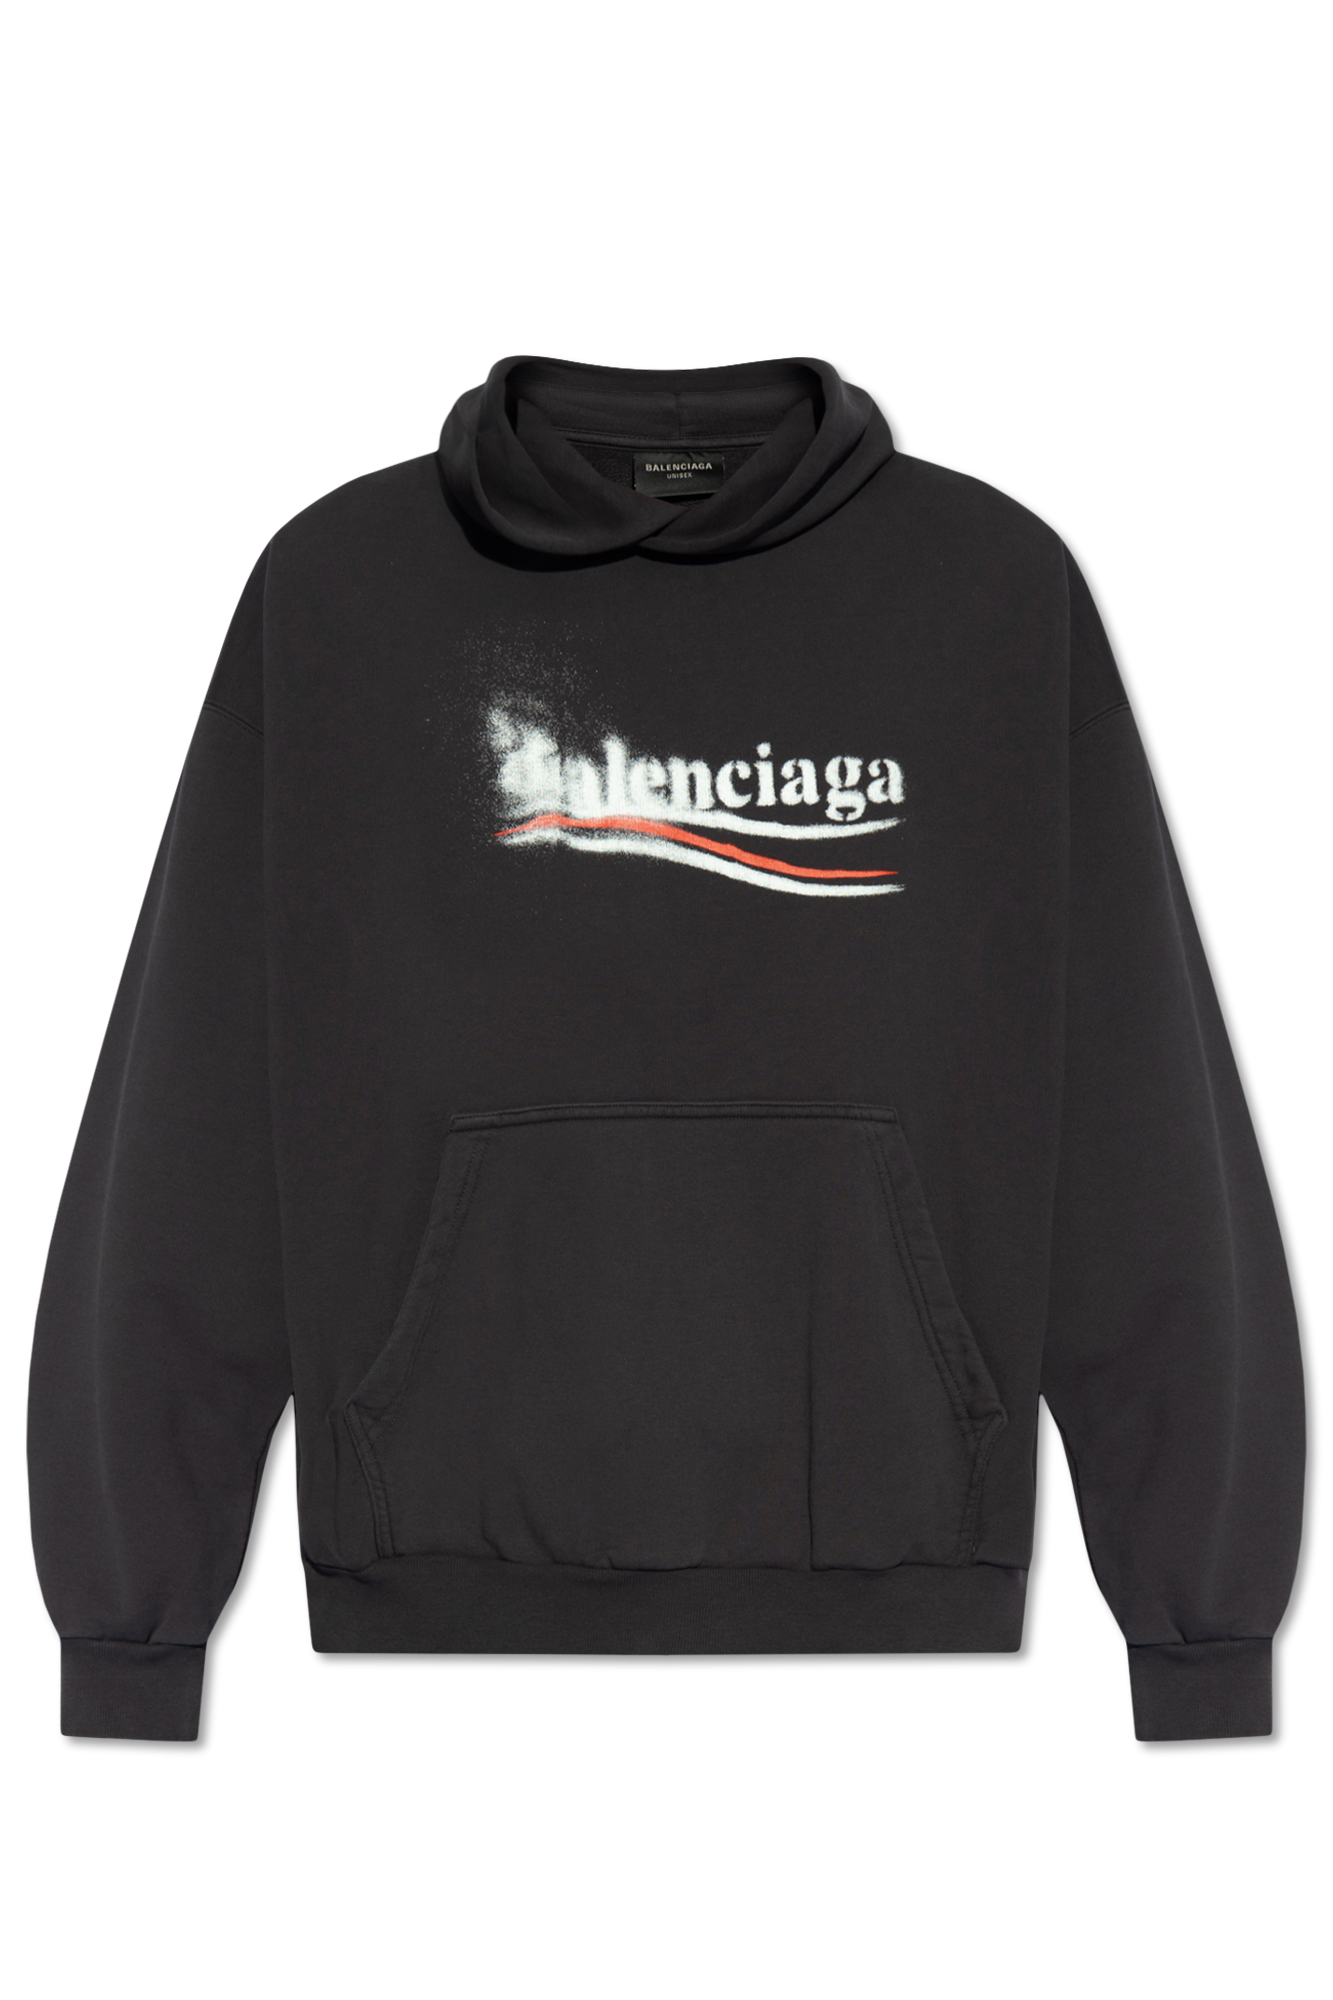 Black Sweatpants with logo Balenciaga - Vitkac GB